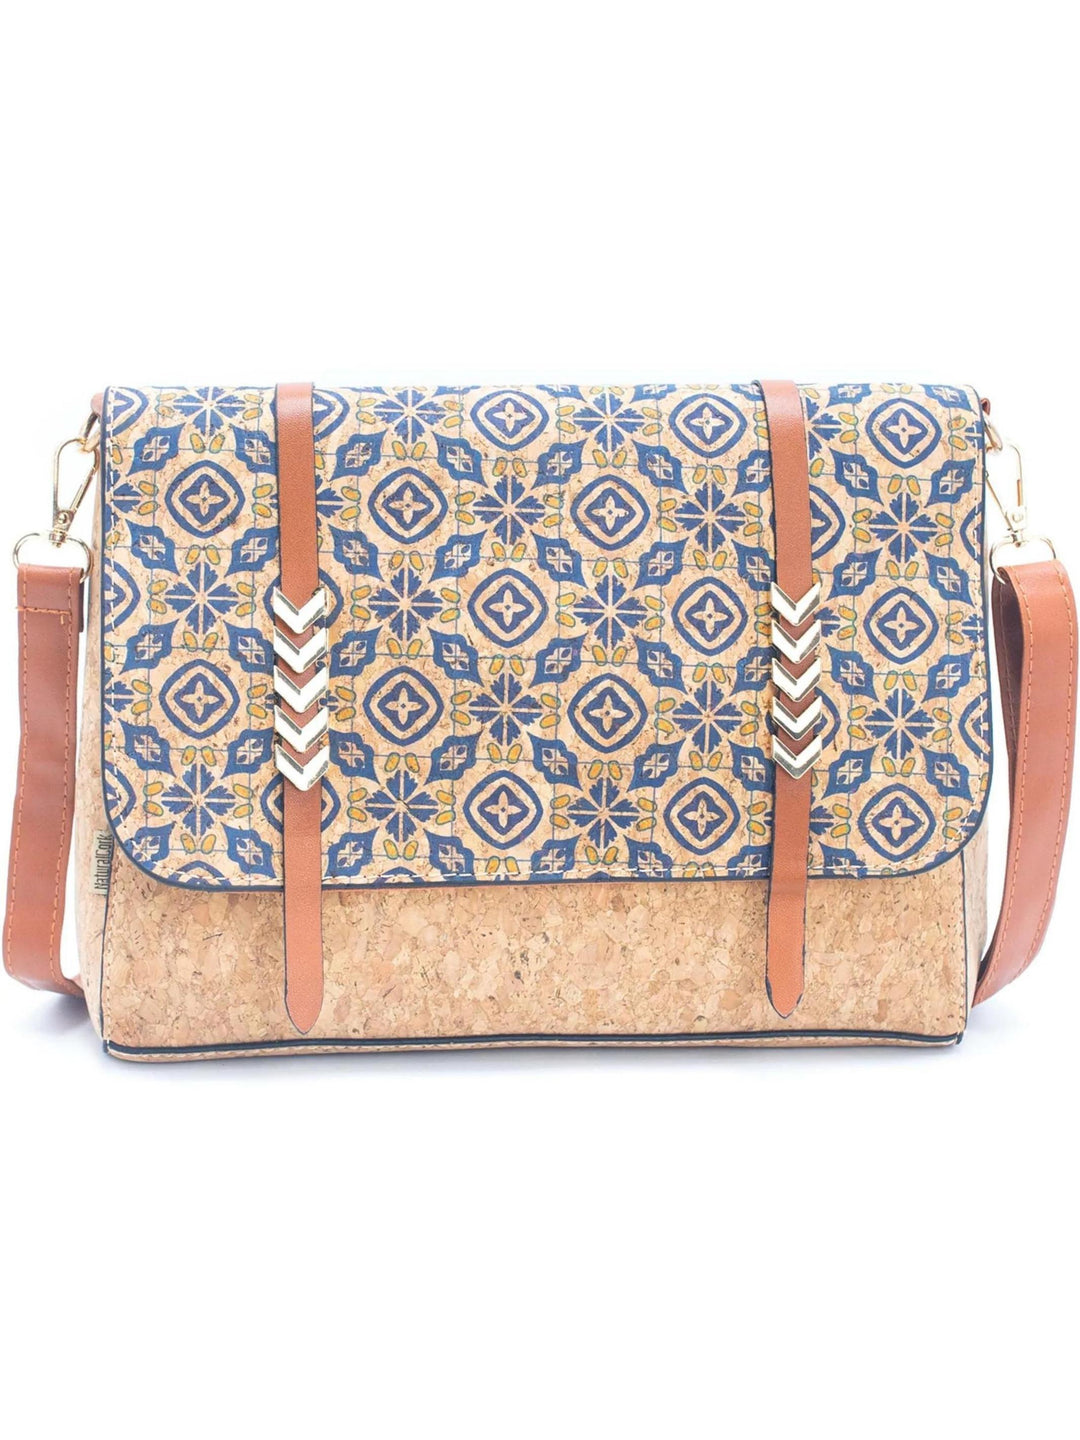 Montado Crossbody Bag Handbag Purse for Women - Handmade in